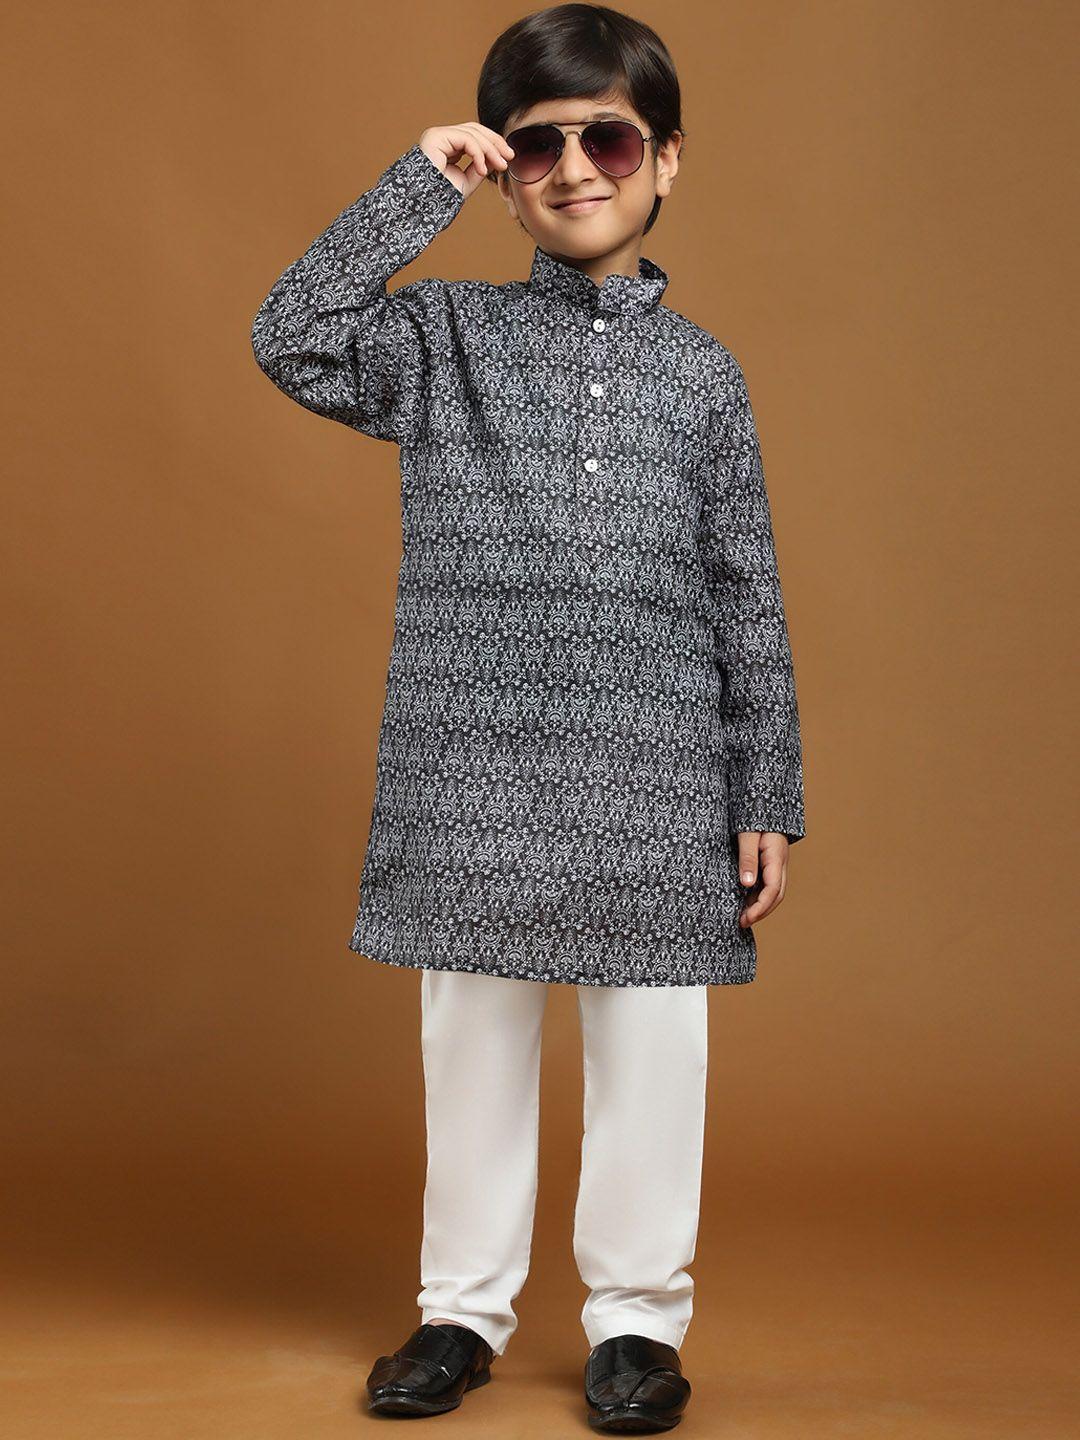 pro-ethic style developer boys ethnic motifs printed regular kurta with pyjamas